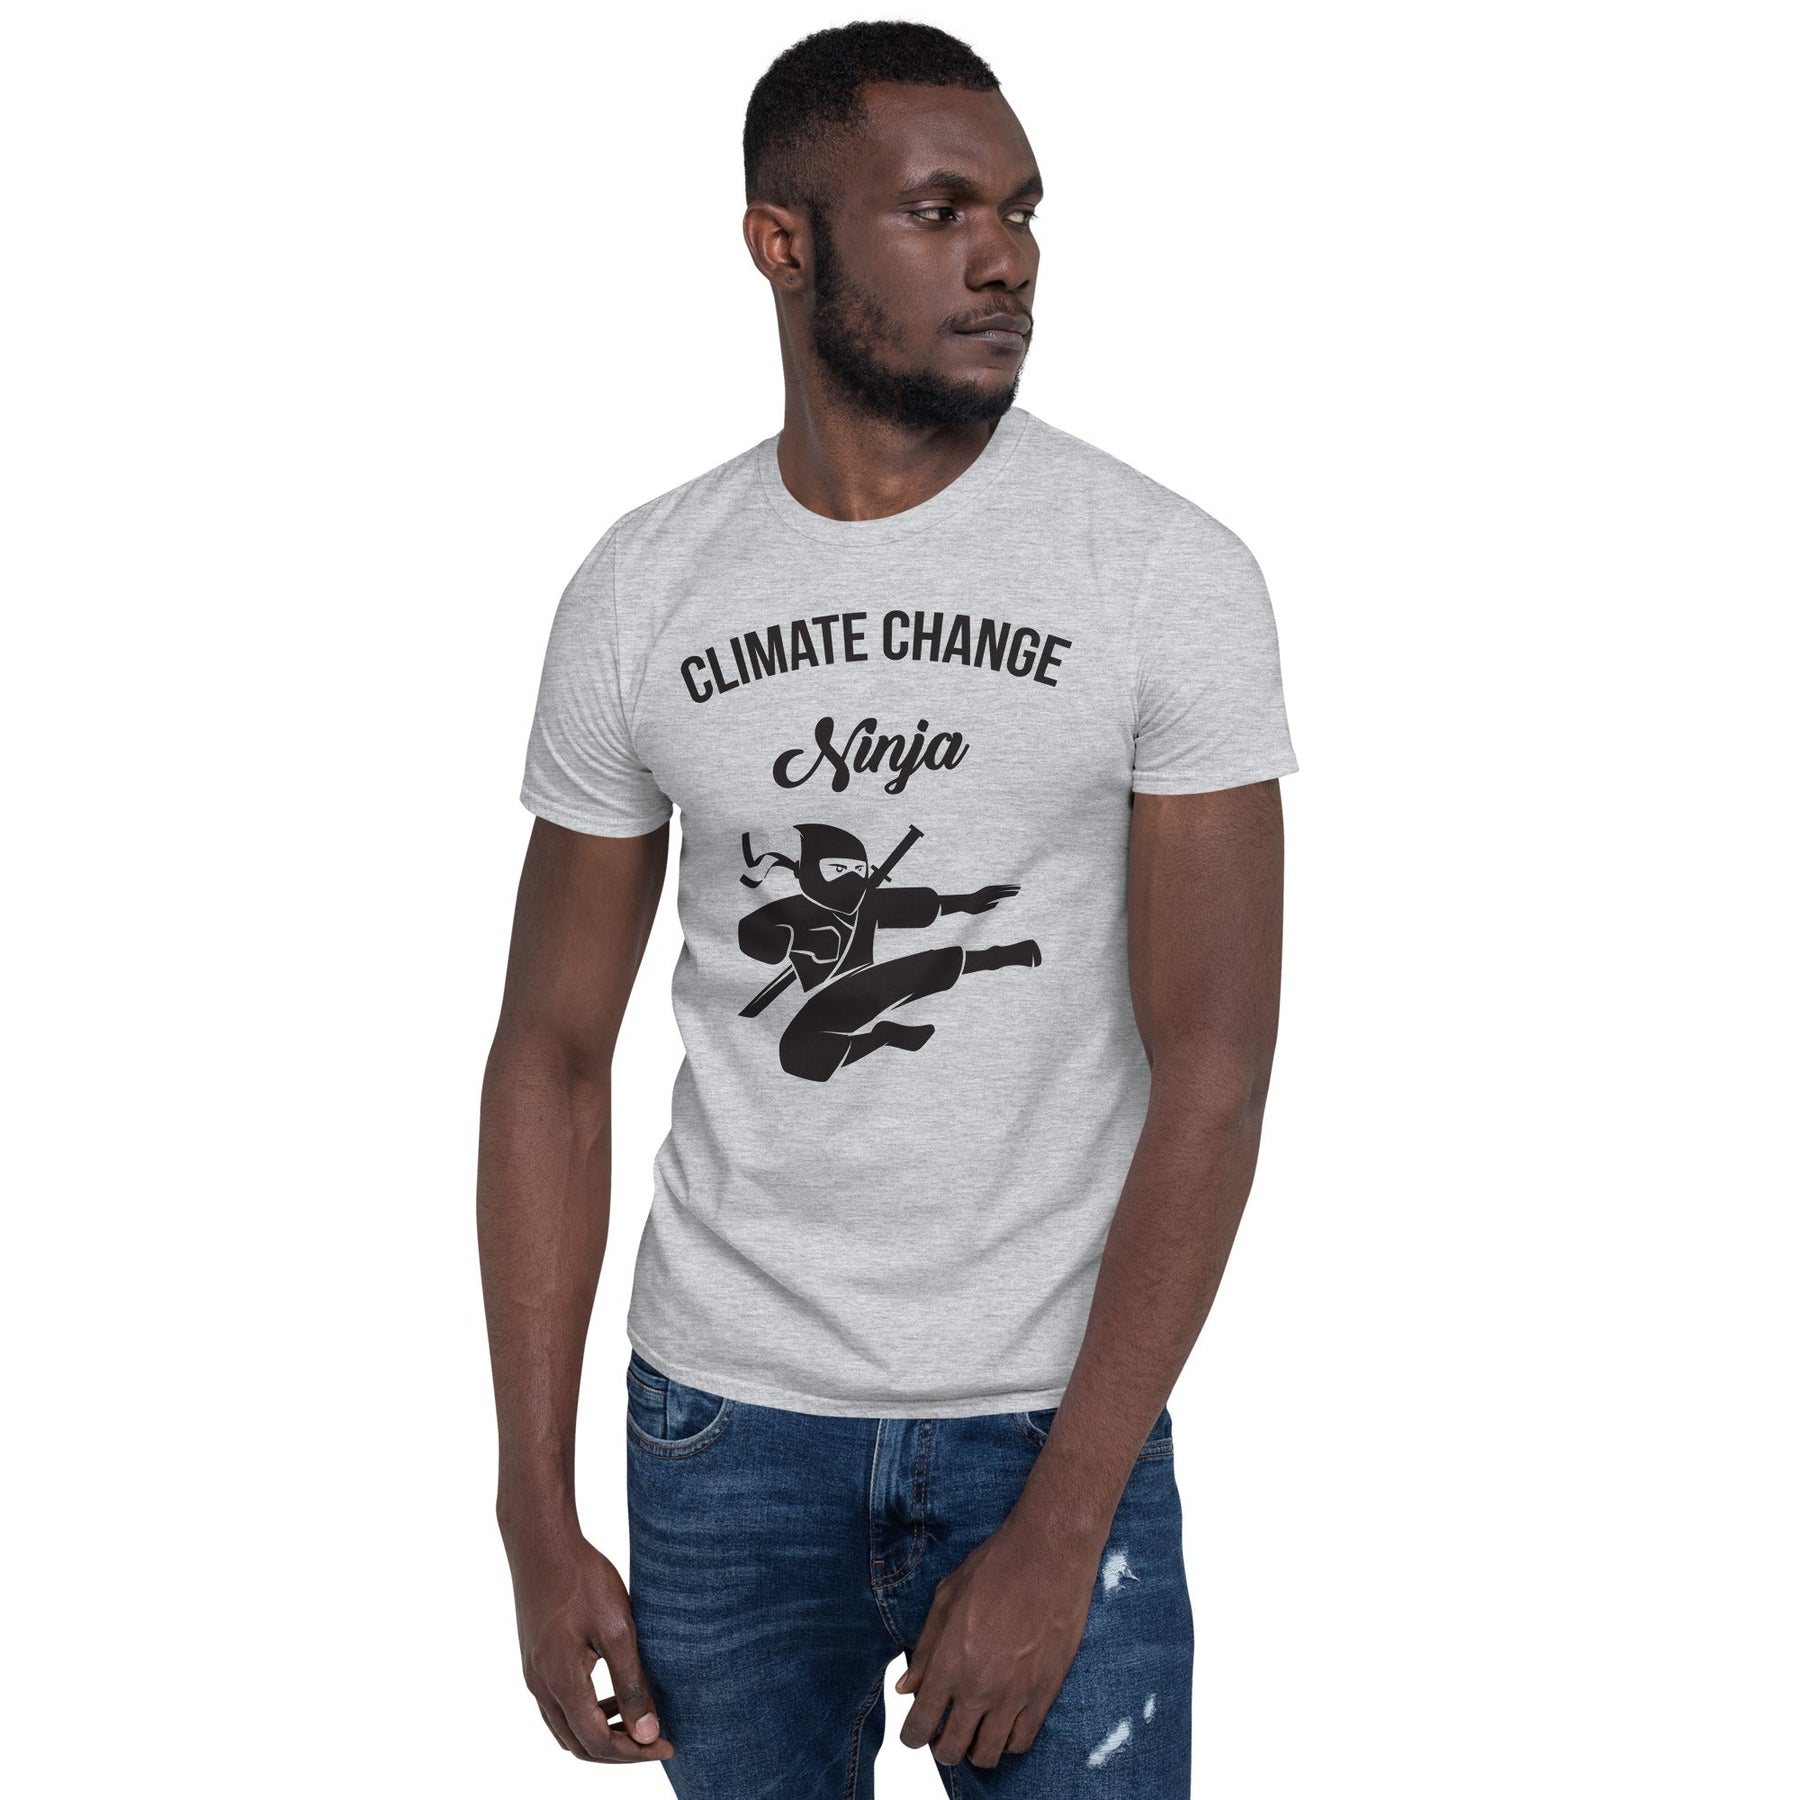 CLIMATE CHANGE NINJA short sleeve T-shirt